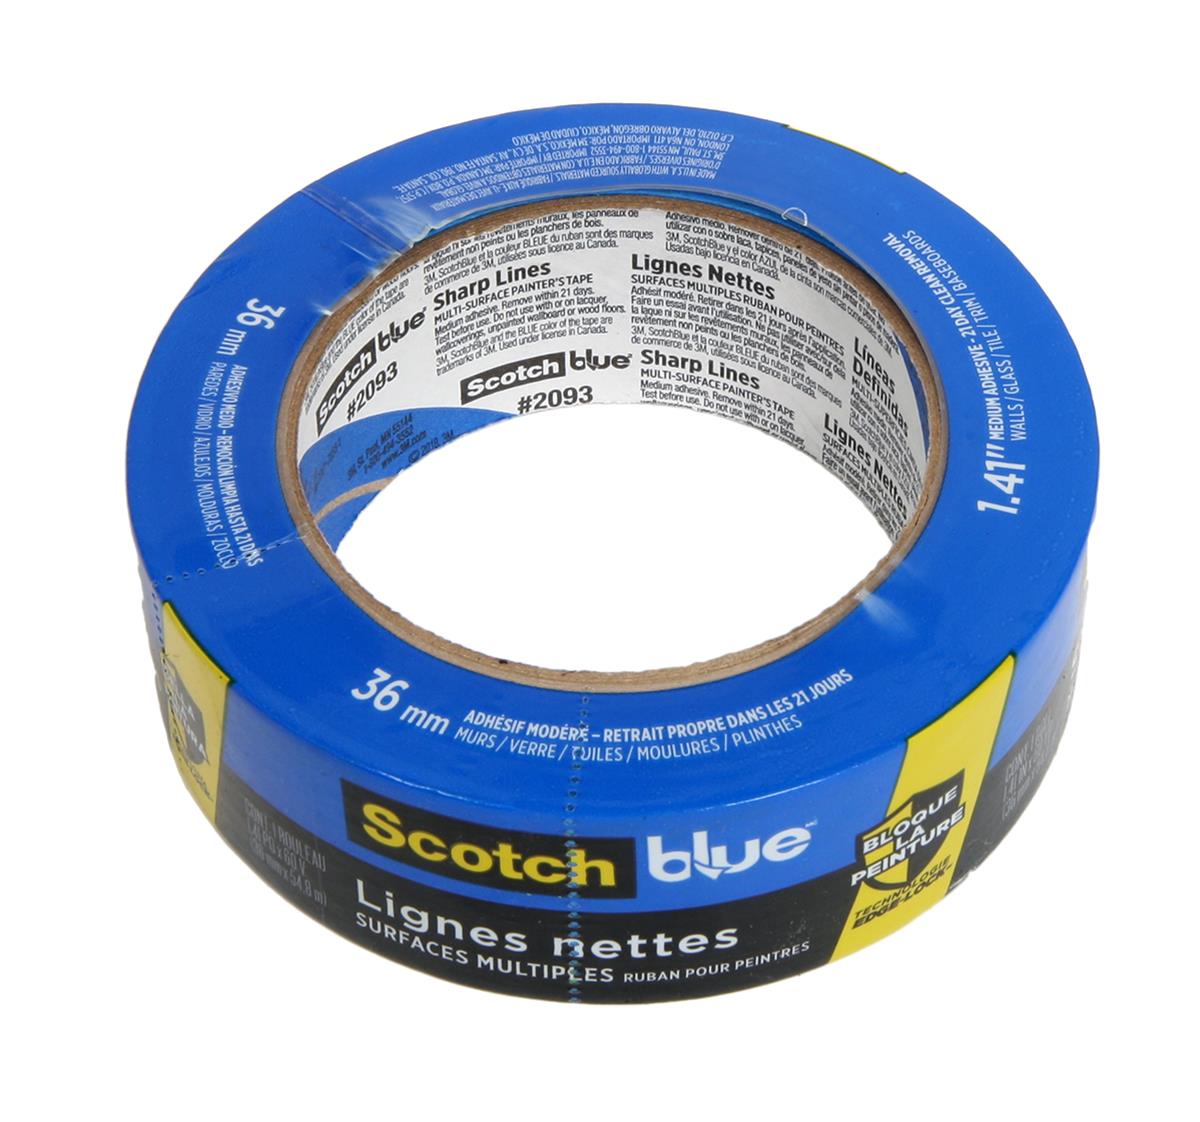 3M Products ScotchBlue Sharp Line Multi-Surface Painter's Tape